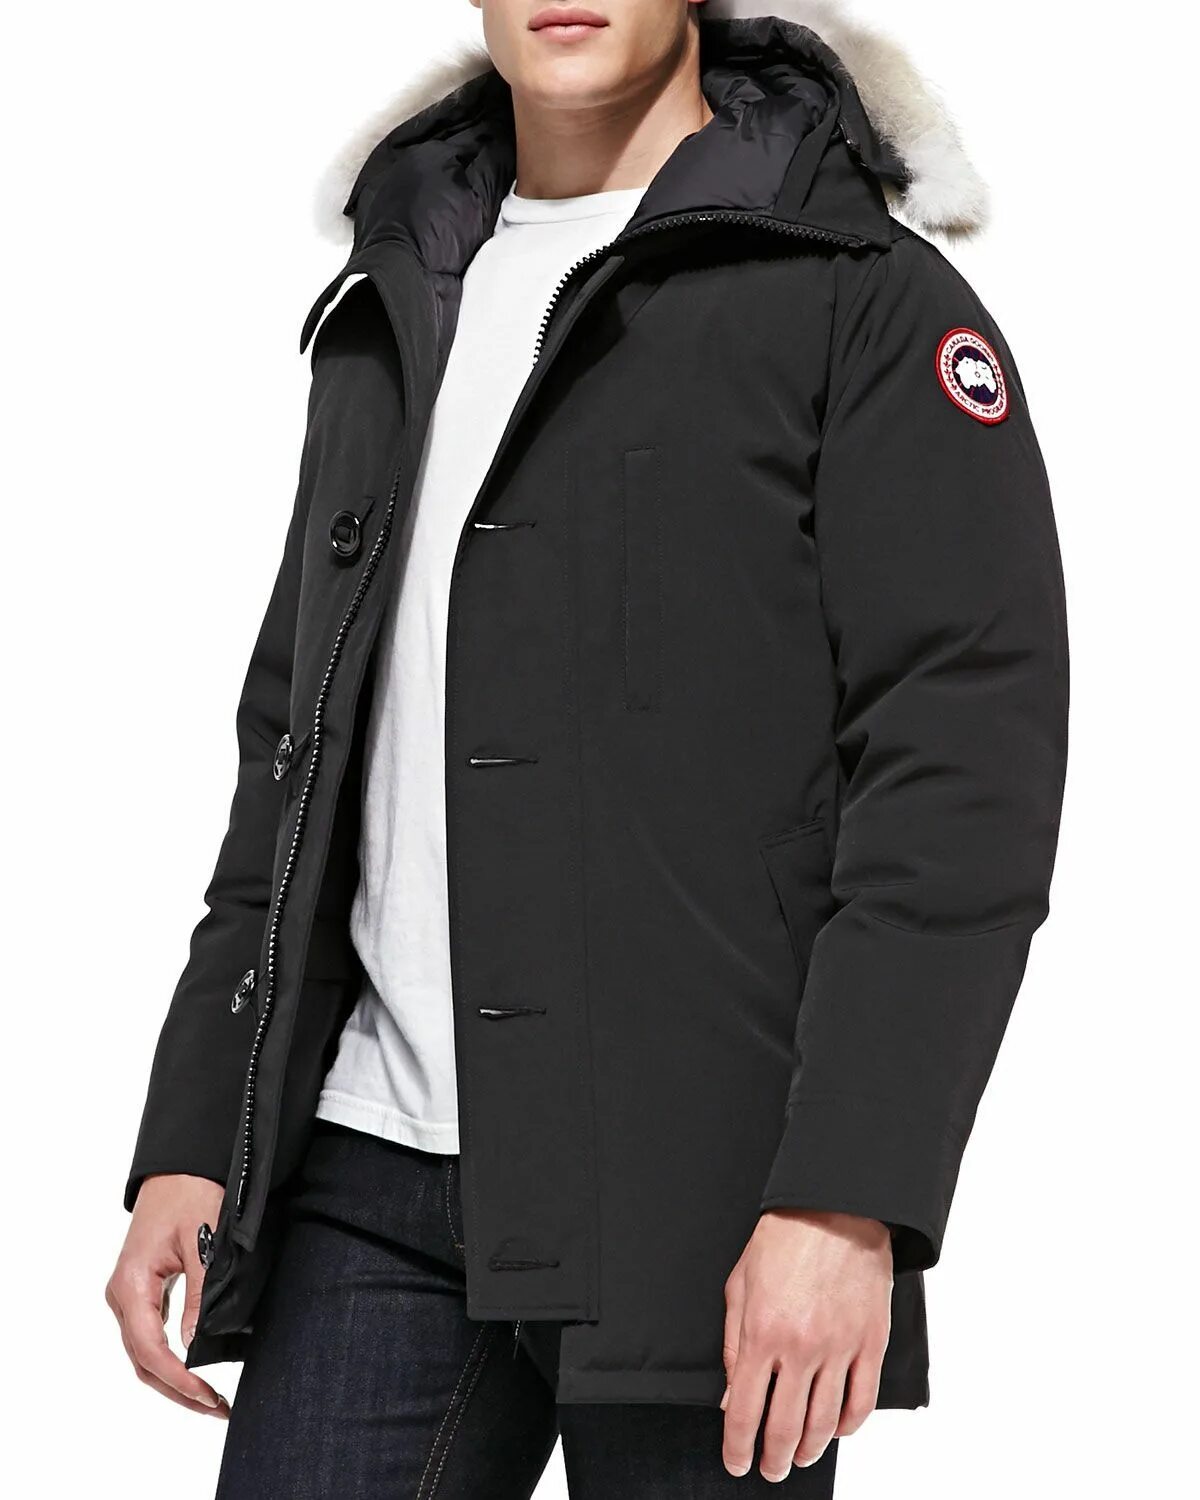 Canada Goose Arctic program куртка мужская. Куртка Canada Goose 3555 мужская зимняя. Canada Goose 9617l. Куртка Канада Гус.